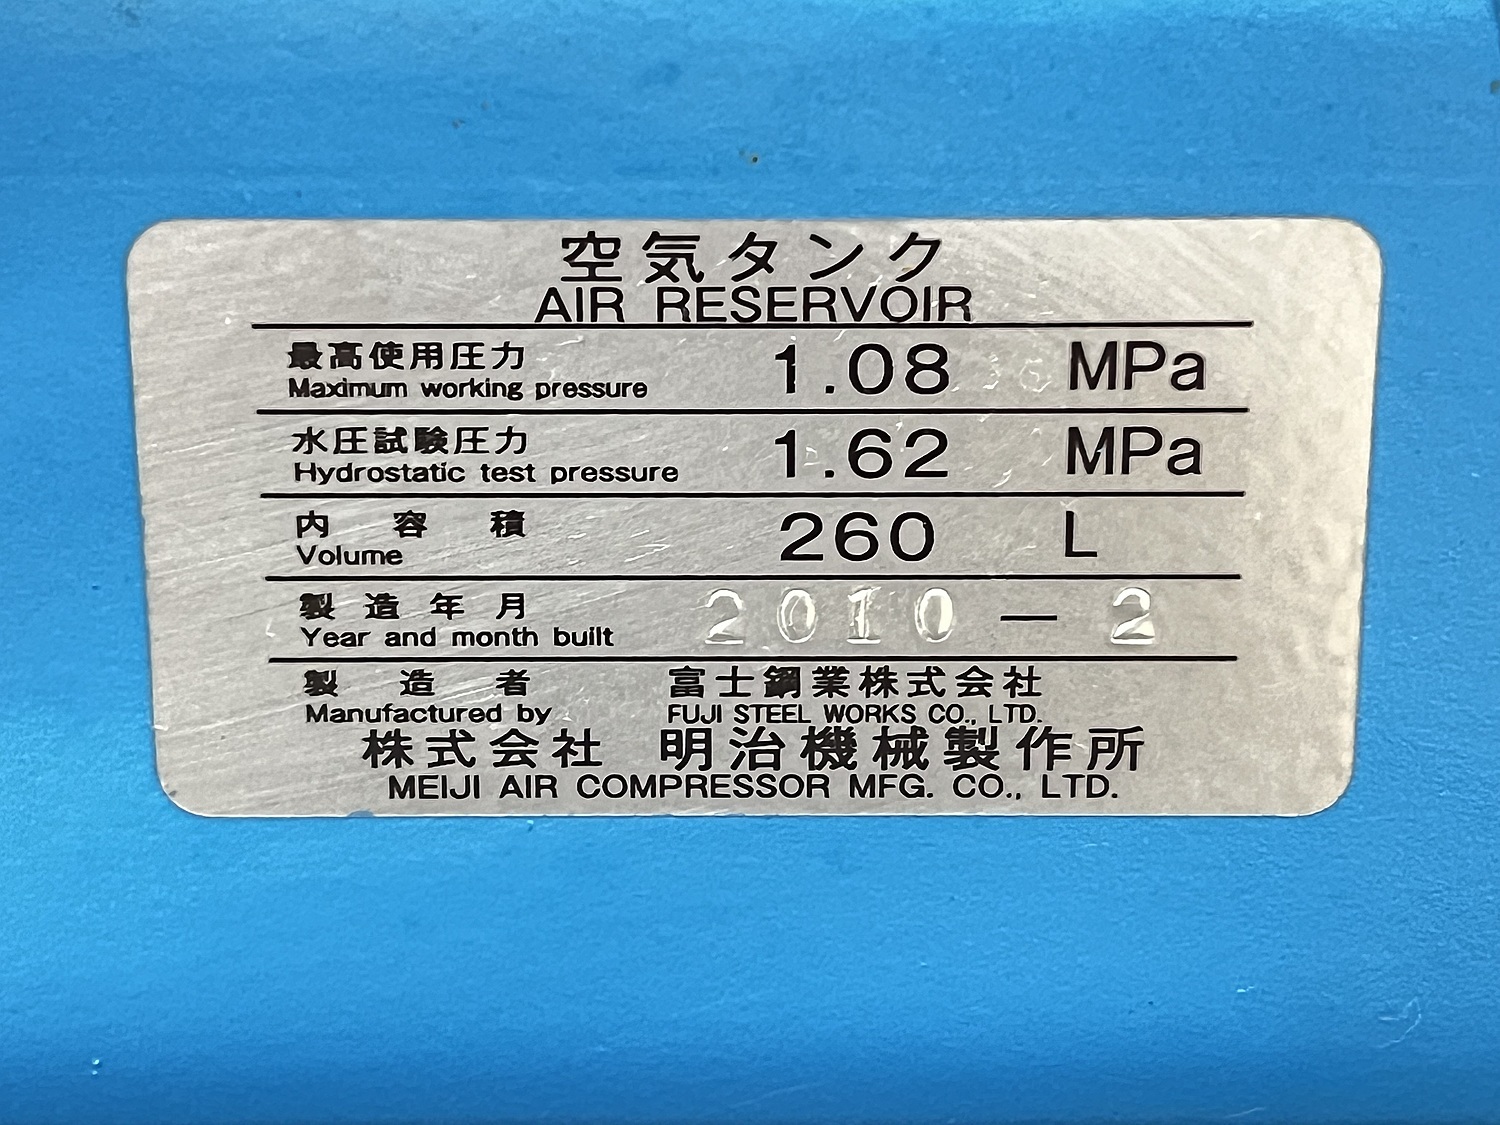 C153512 レシプロコンプレッサー 明治機械製作所 GK-110C6 | 株式会社 小林機械